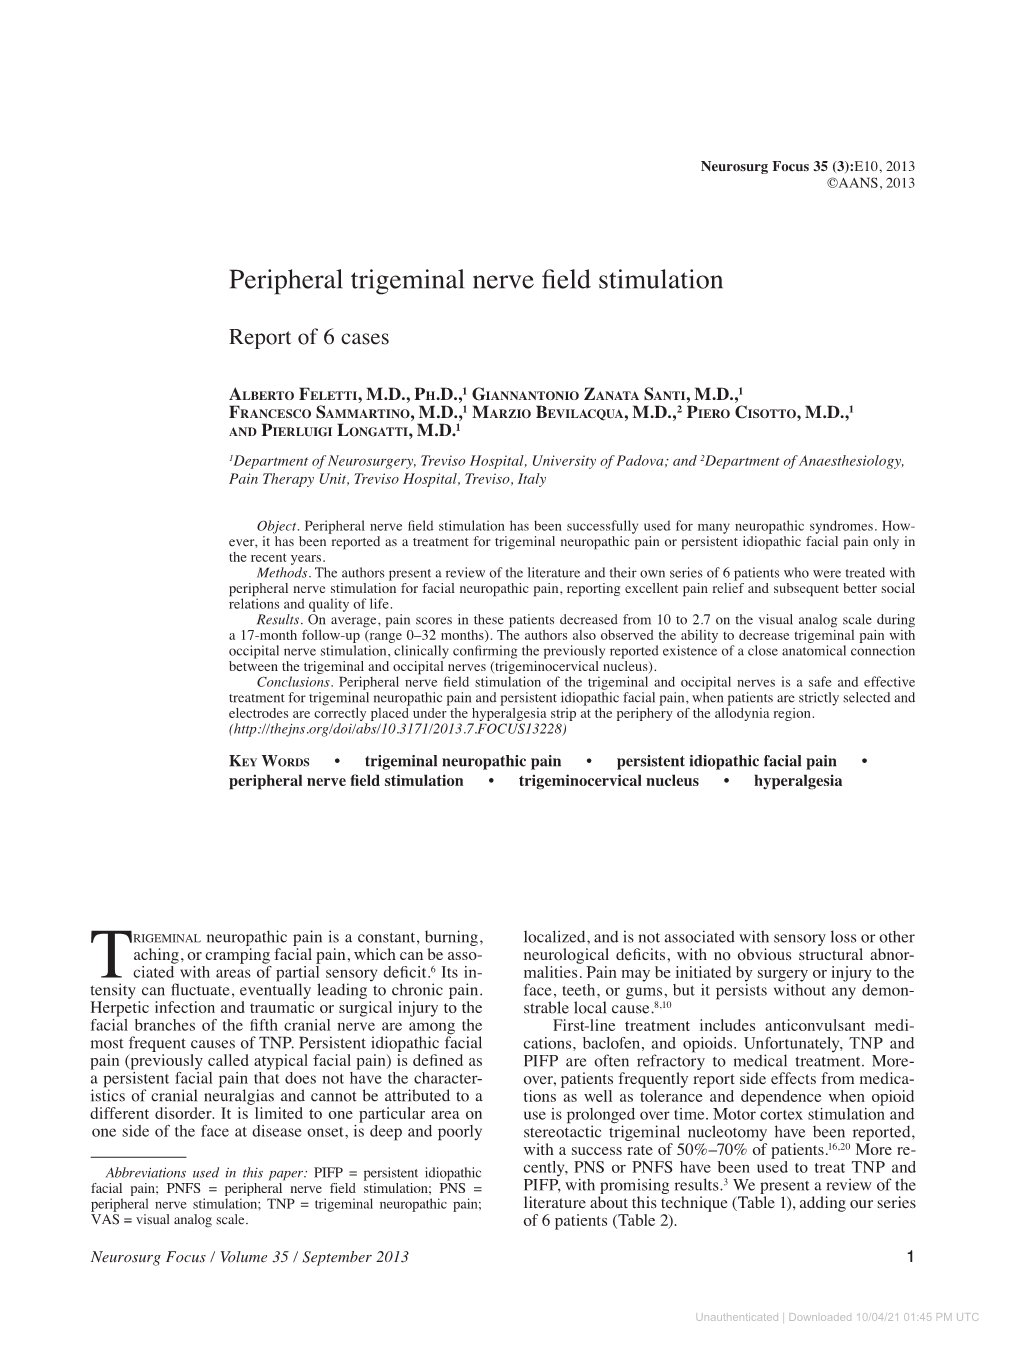 Peripheral Trigeminal Nerve Field Stimulation